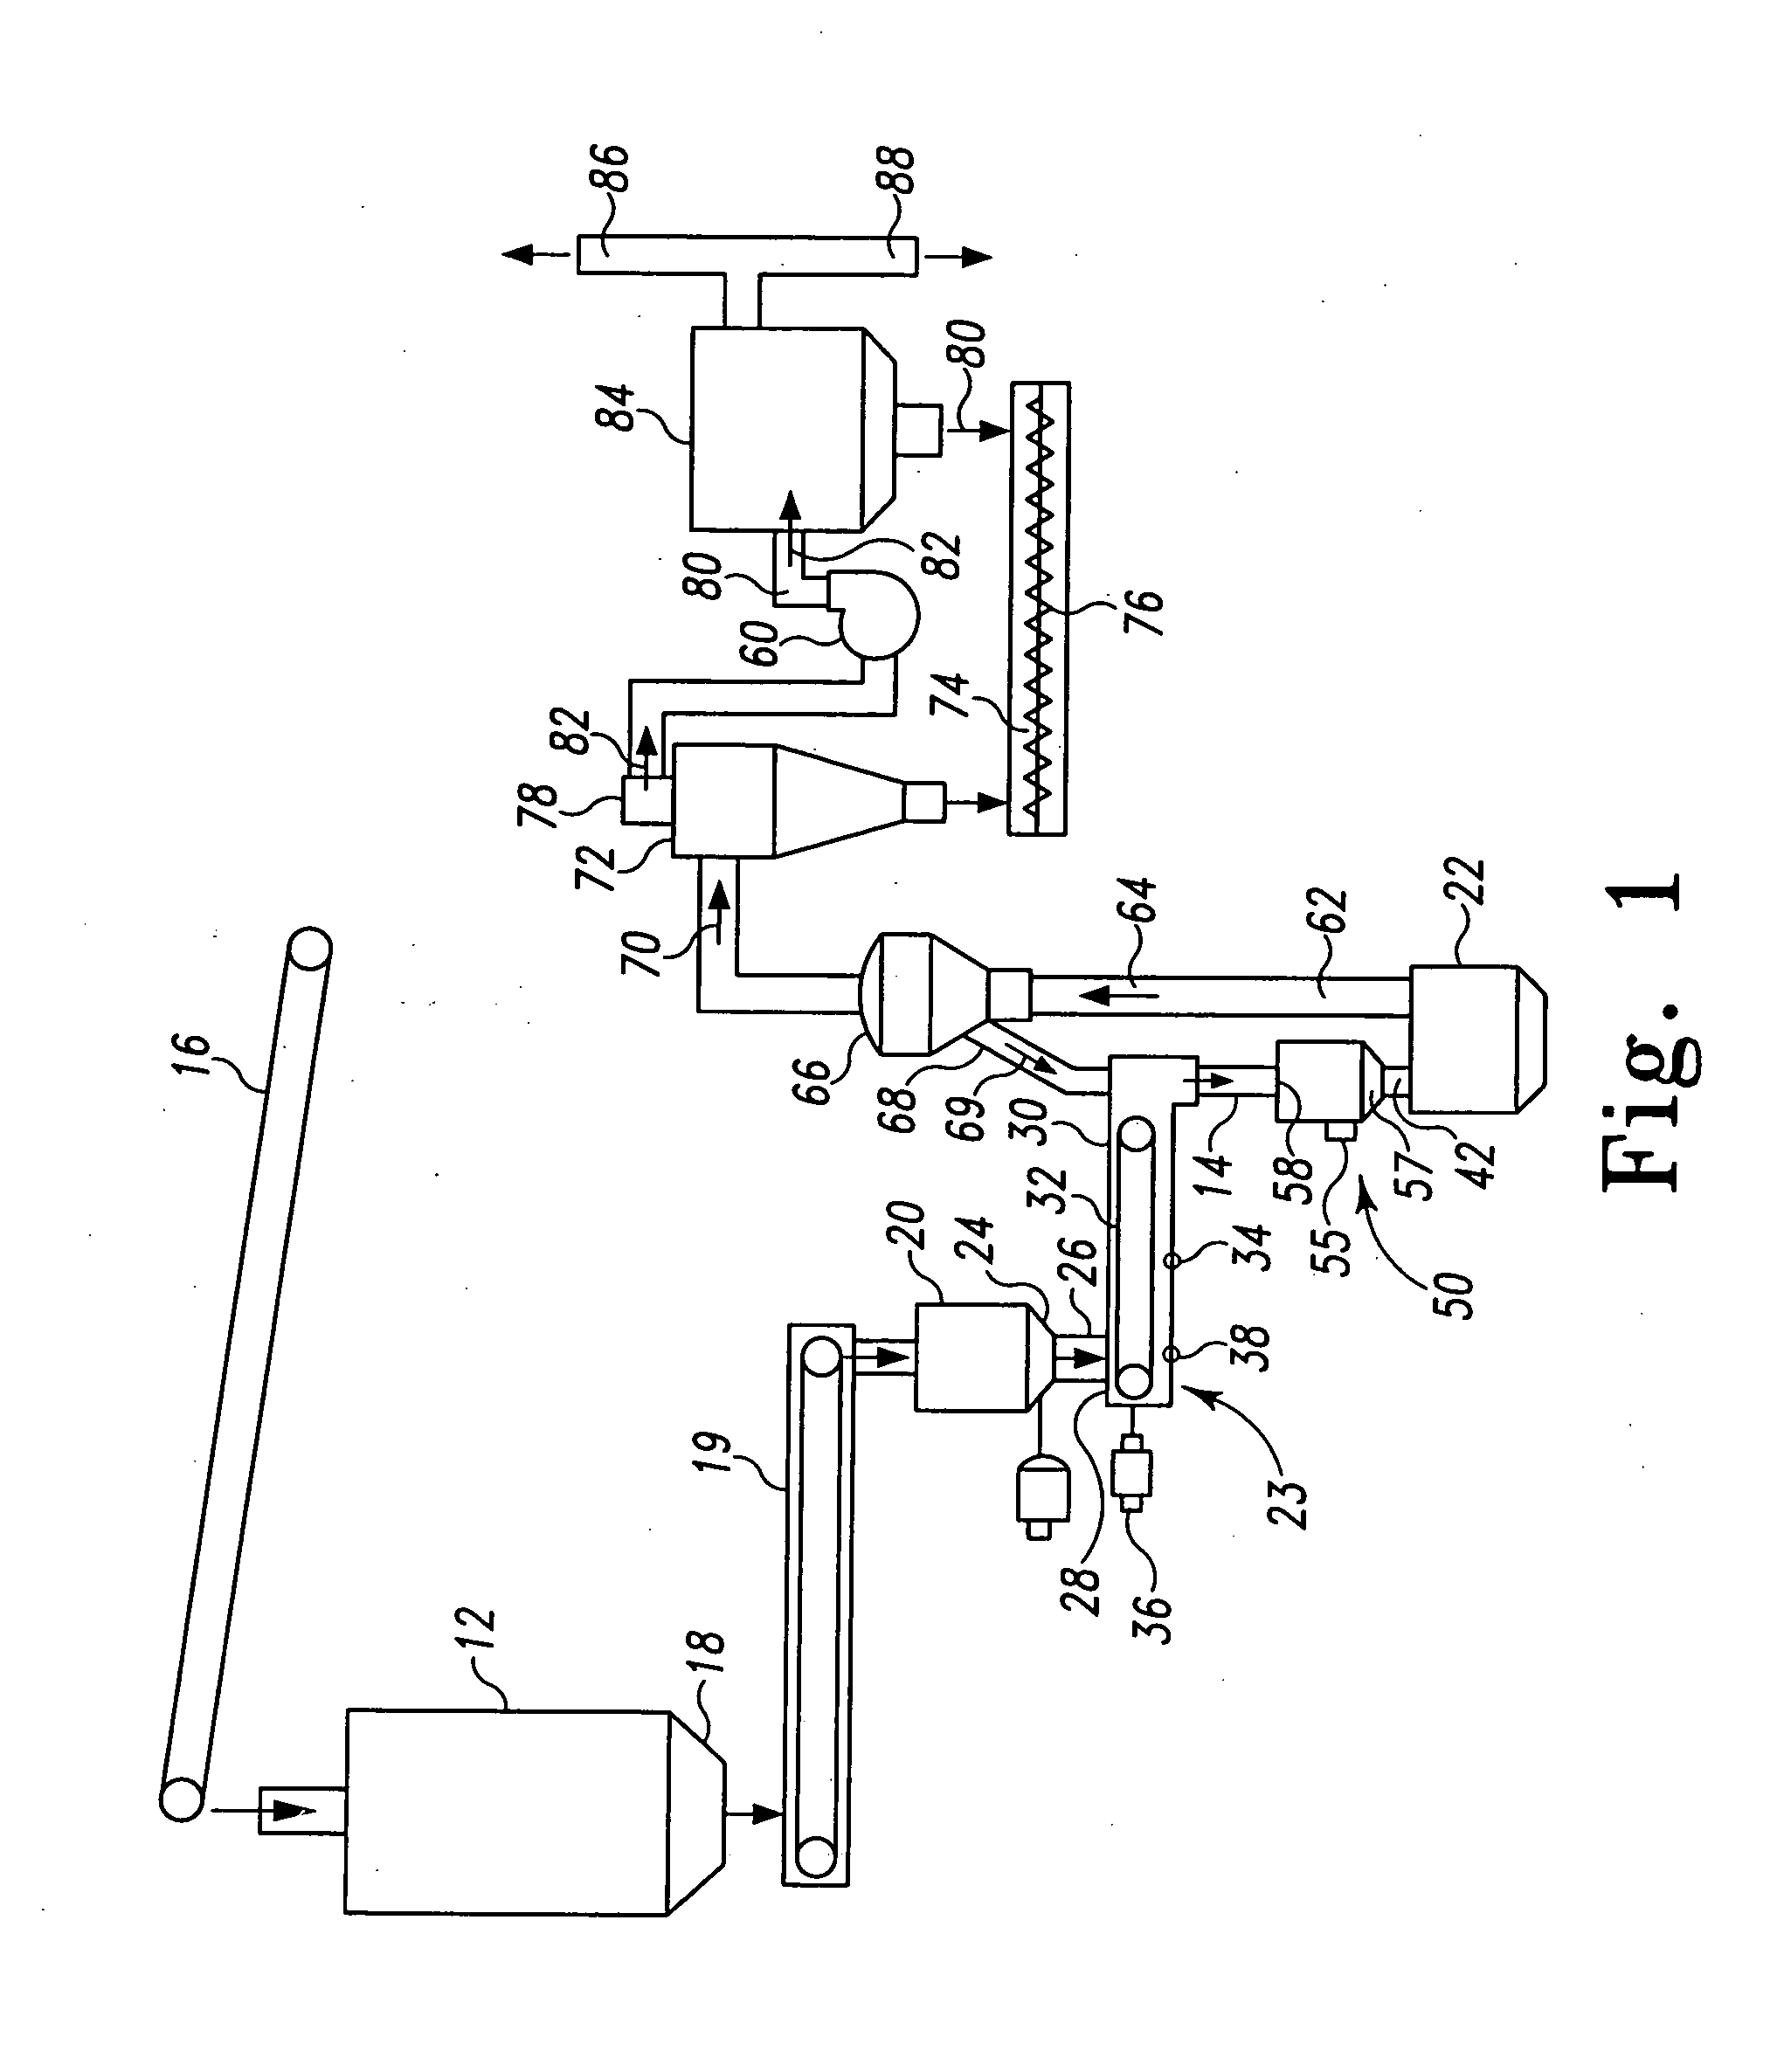 Method and apparatus for calcining gypsum